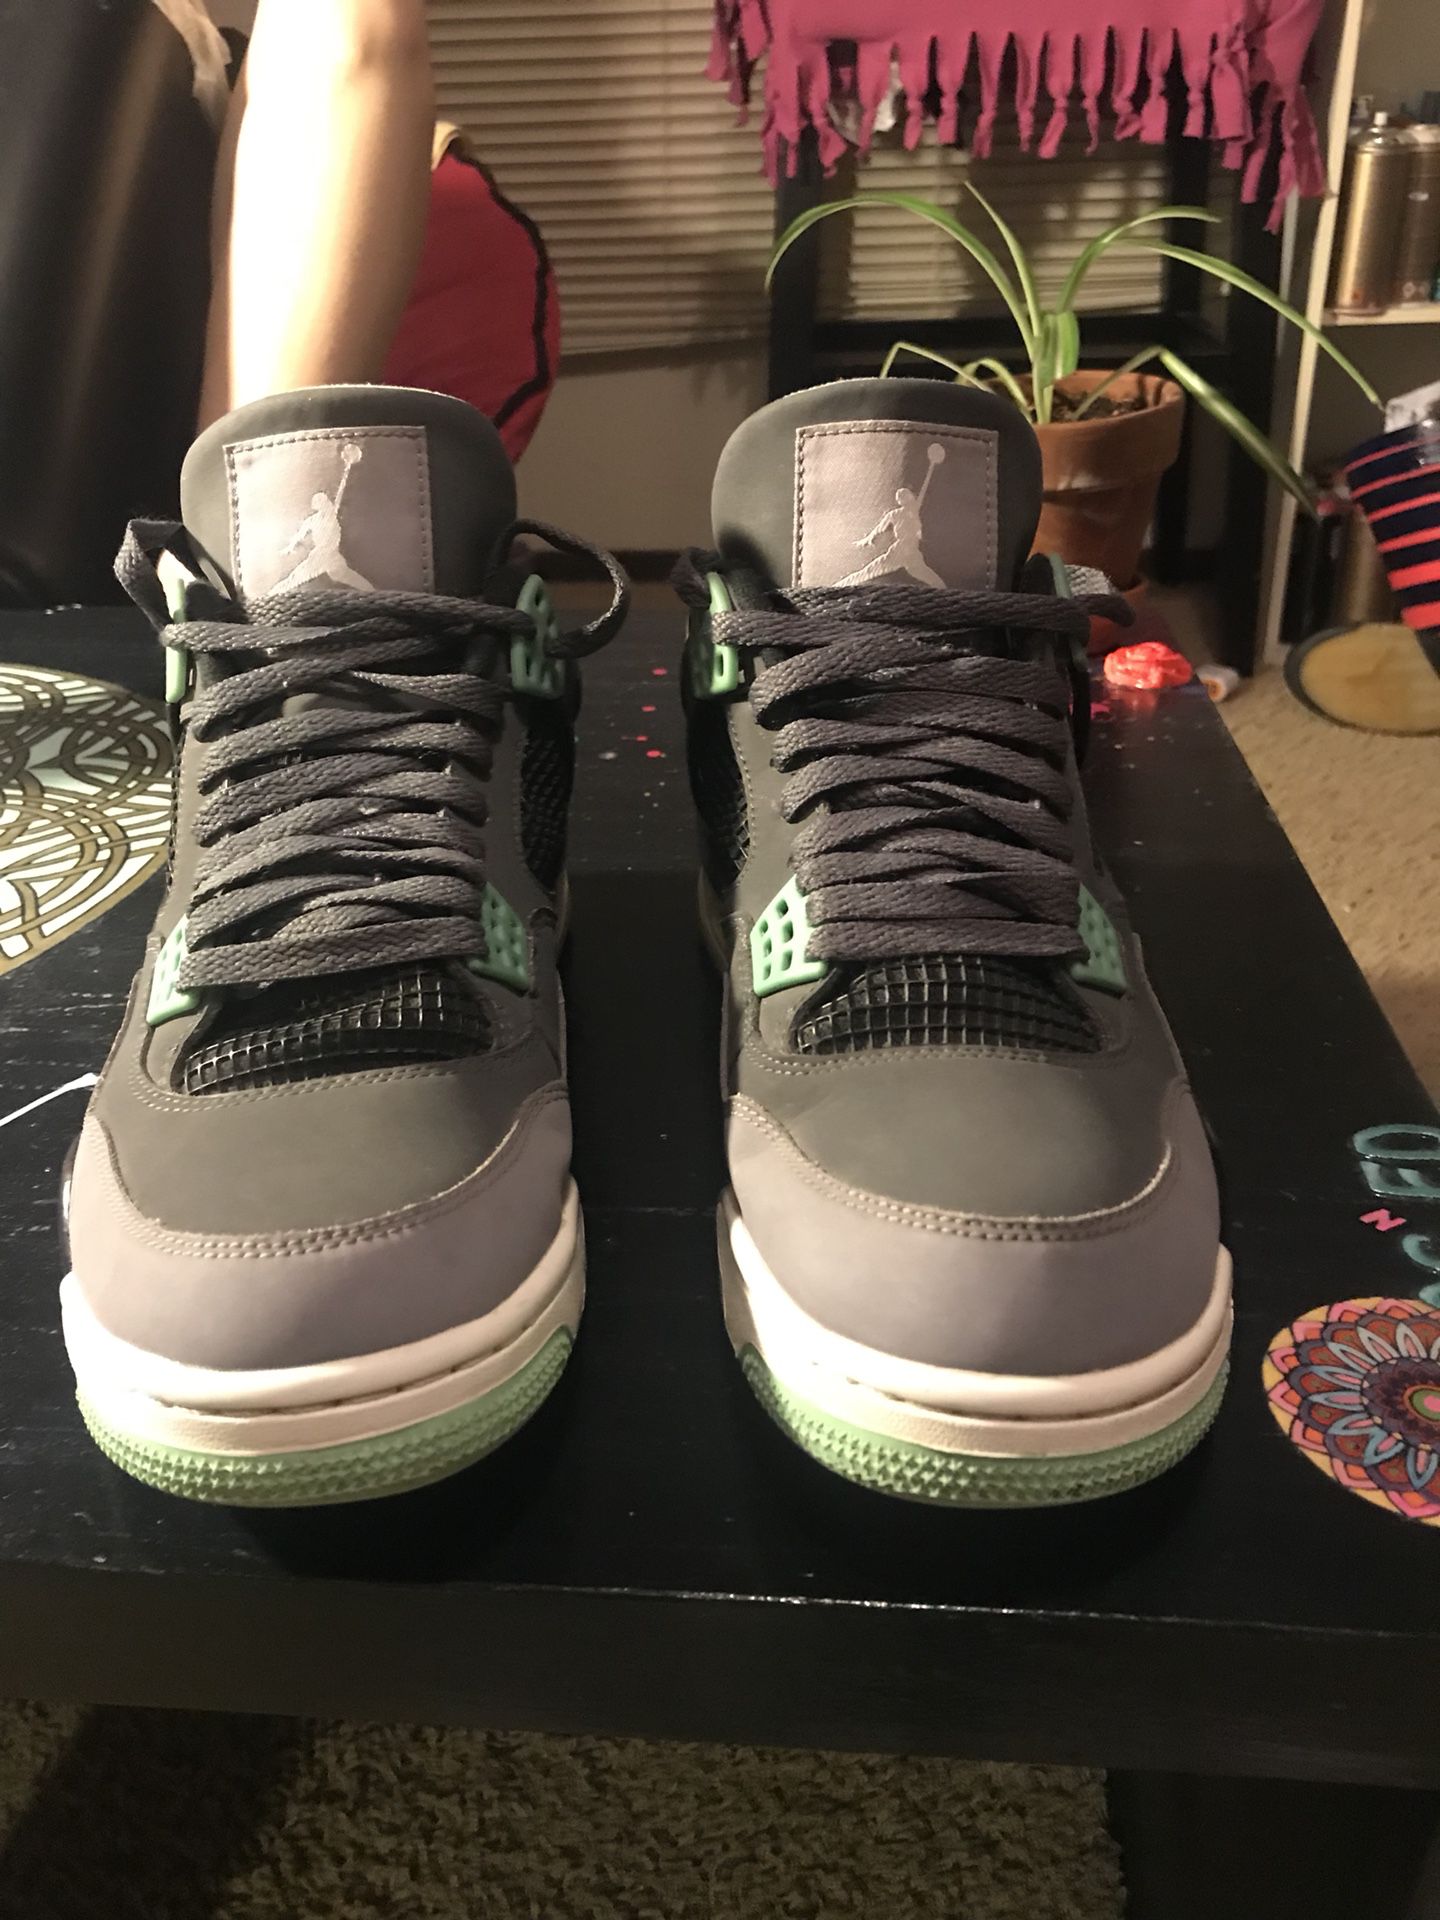 Jordan Retro 4s Green Glows. Size 10 VNDS! $210 obo